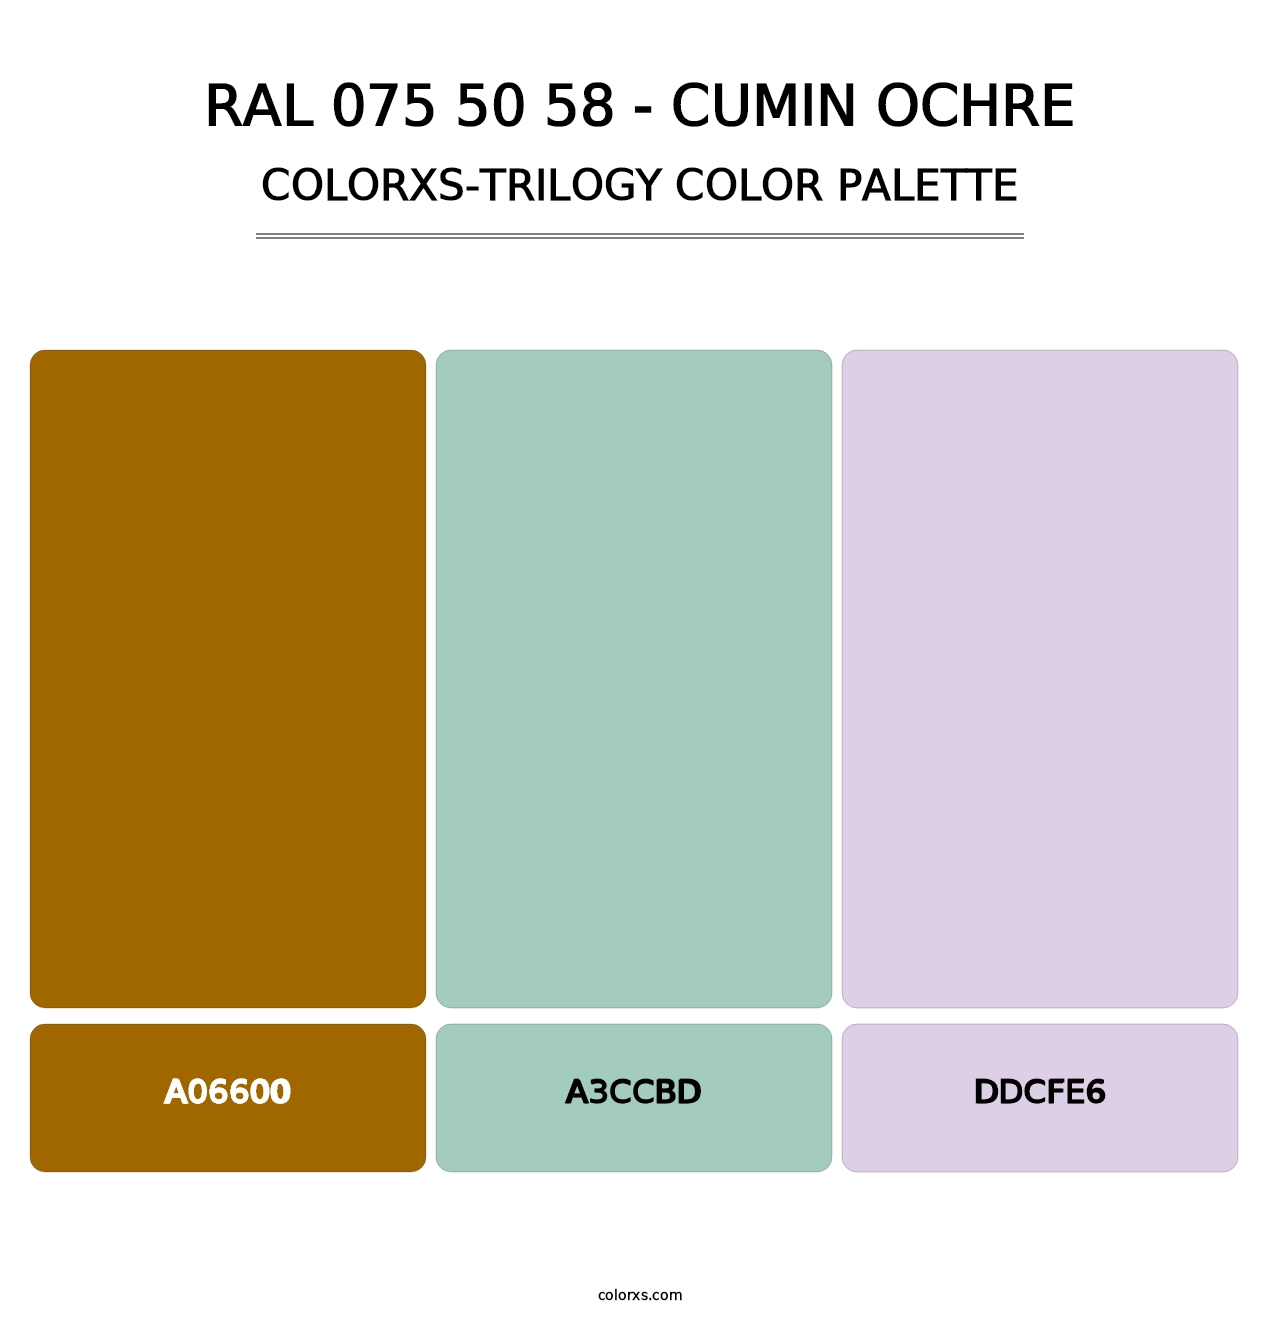 RAL 075 50 58 - Cumin Ochre - Colorxs Trilogy Palette